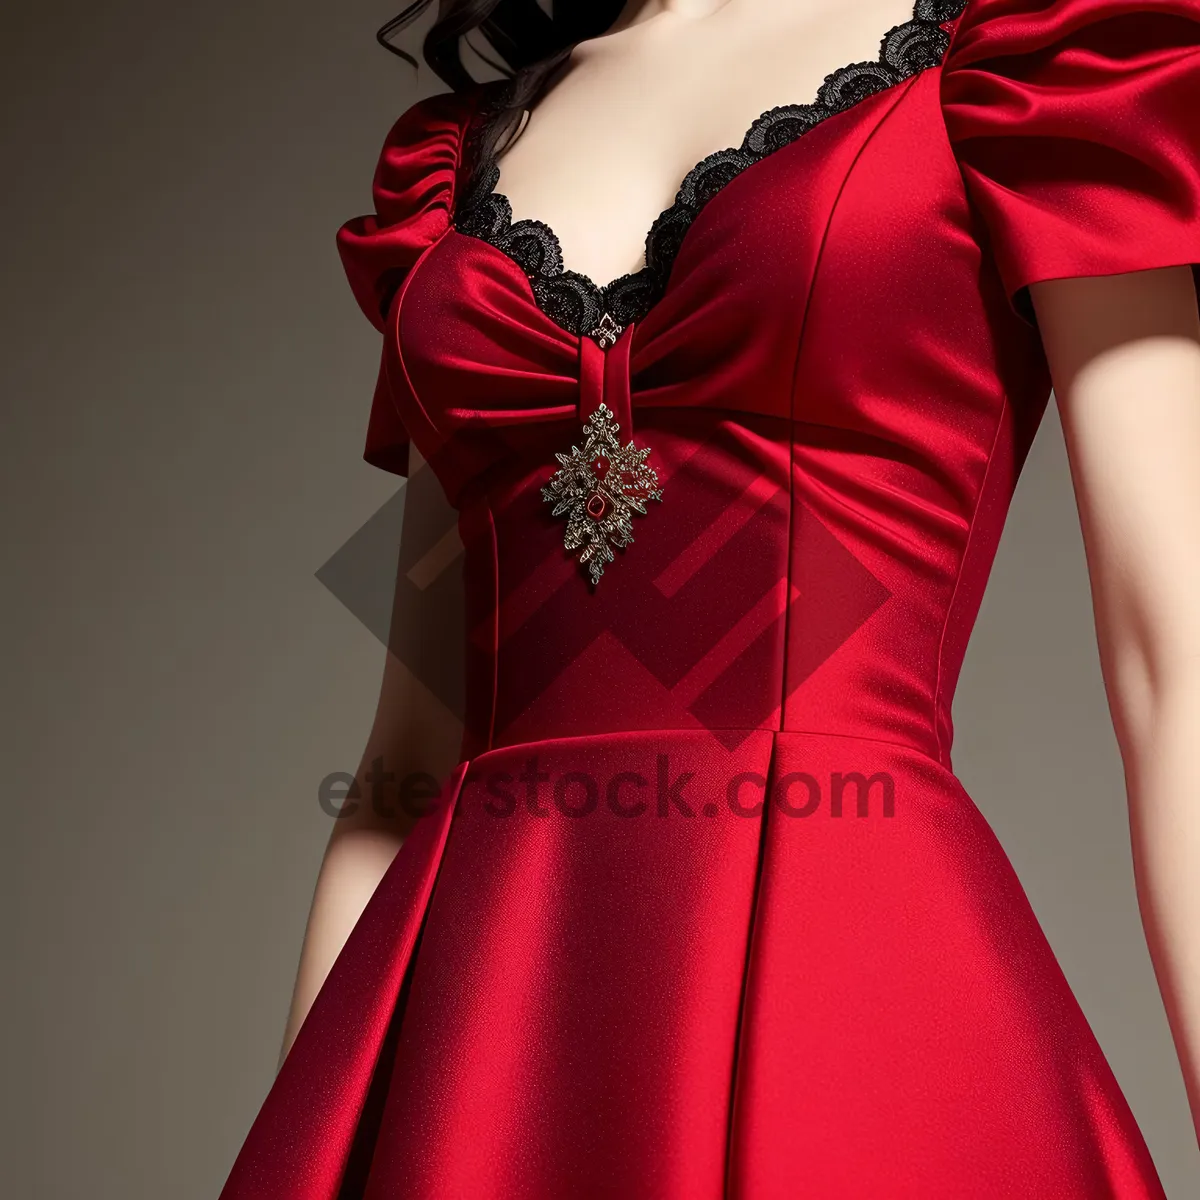 Picture of Sensual Brunette Fashion Model in Elegant Satin Dress